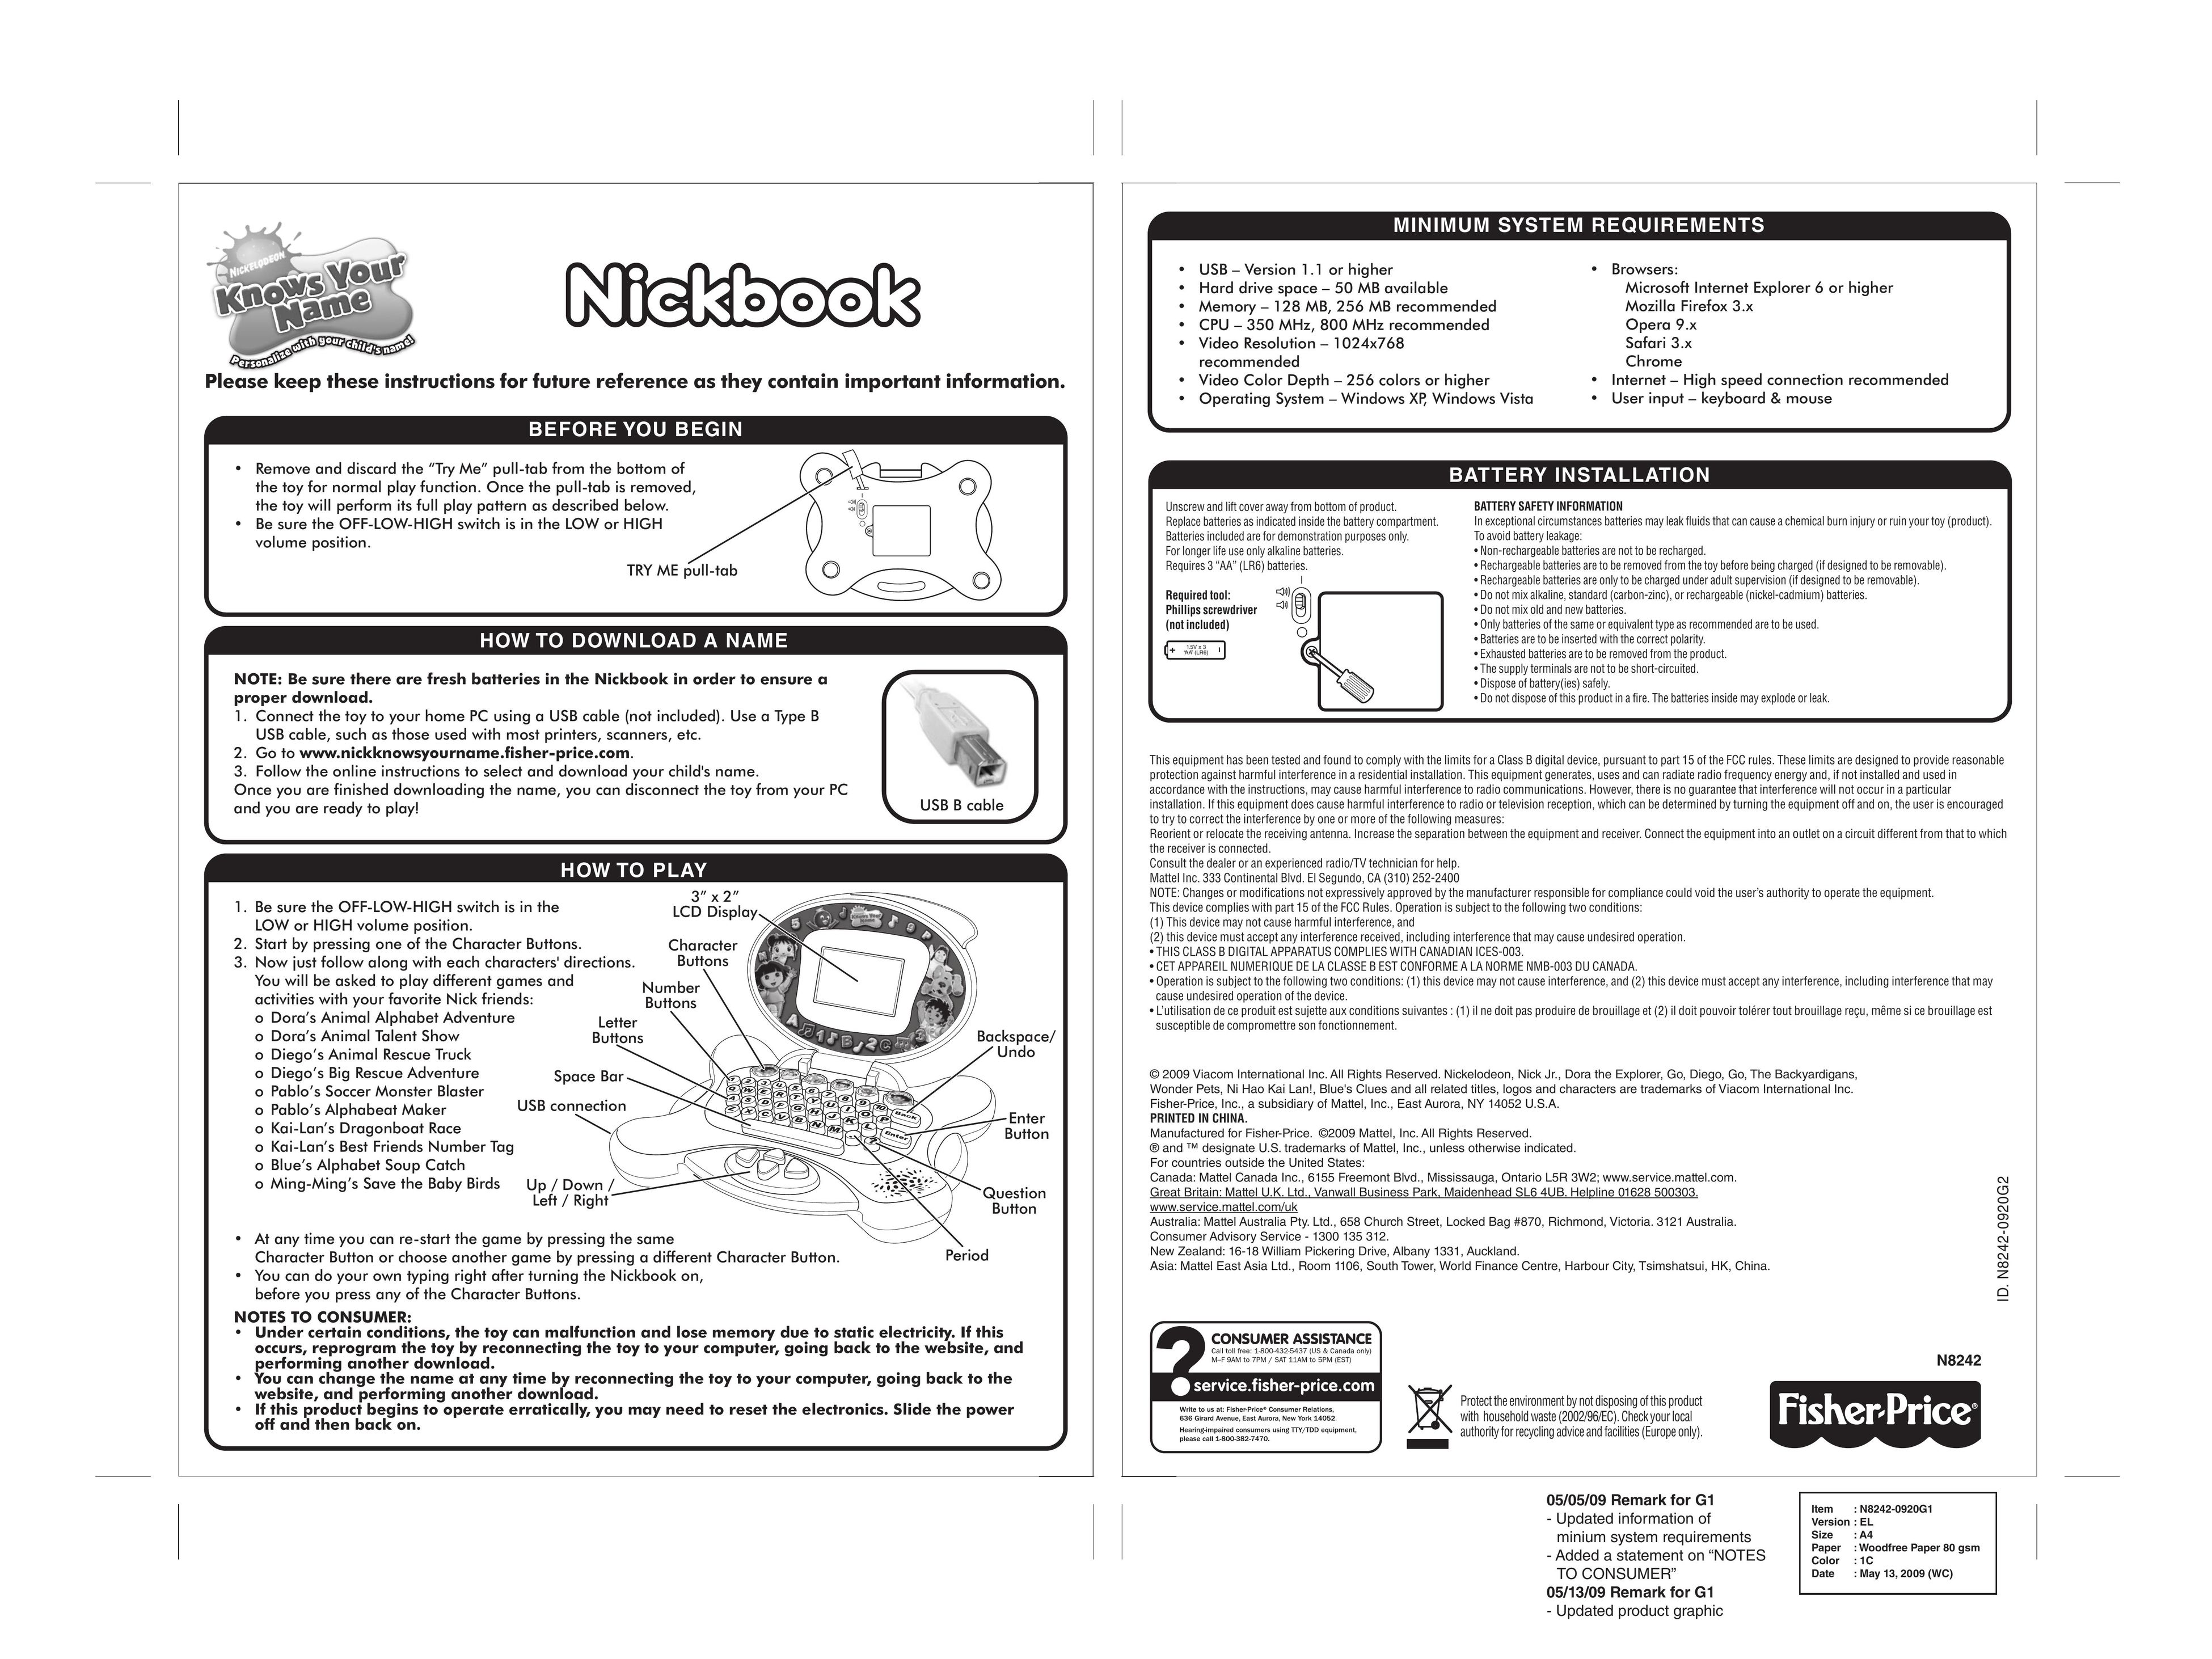 Fisher-Price N8242-0920G1 Video Games User Manual